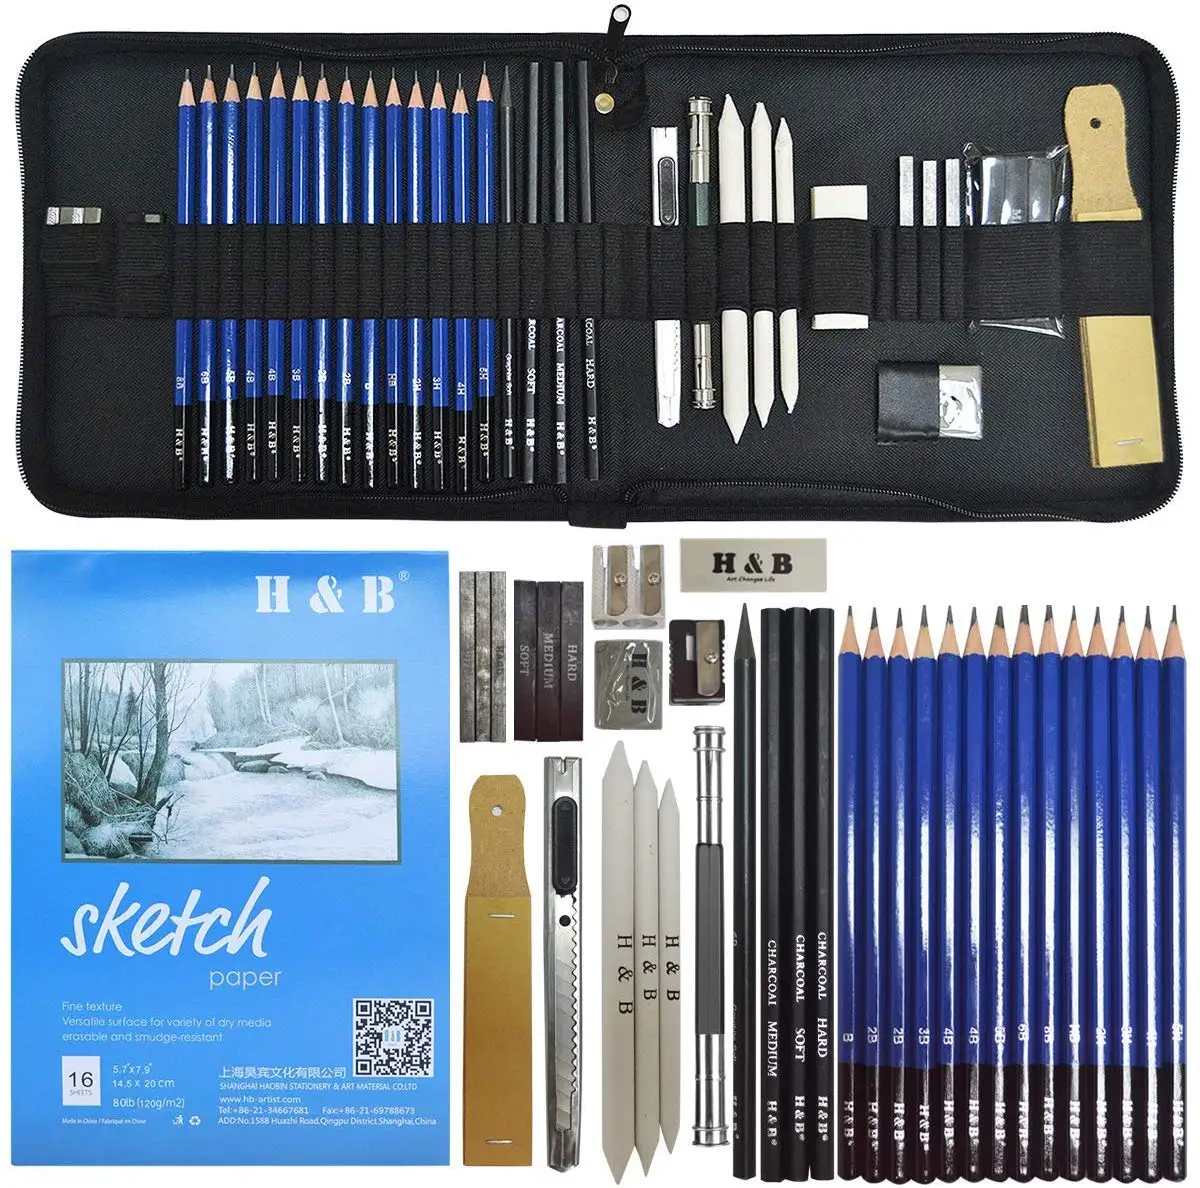 https://ae01.alicdn.com/kf/H970e7d13c00544048d324a5b245eb731Y/Pack-of-36-Professional-Art-Kit-Artist-Drawing-and-Sketching-Pencil-Set-Charcoal-Sketching-Pencils-Set.jpg